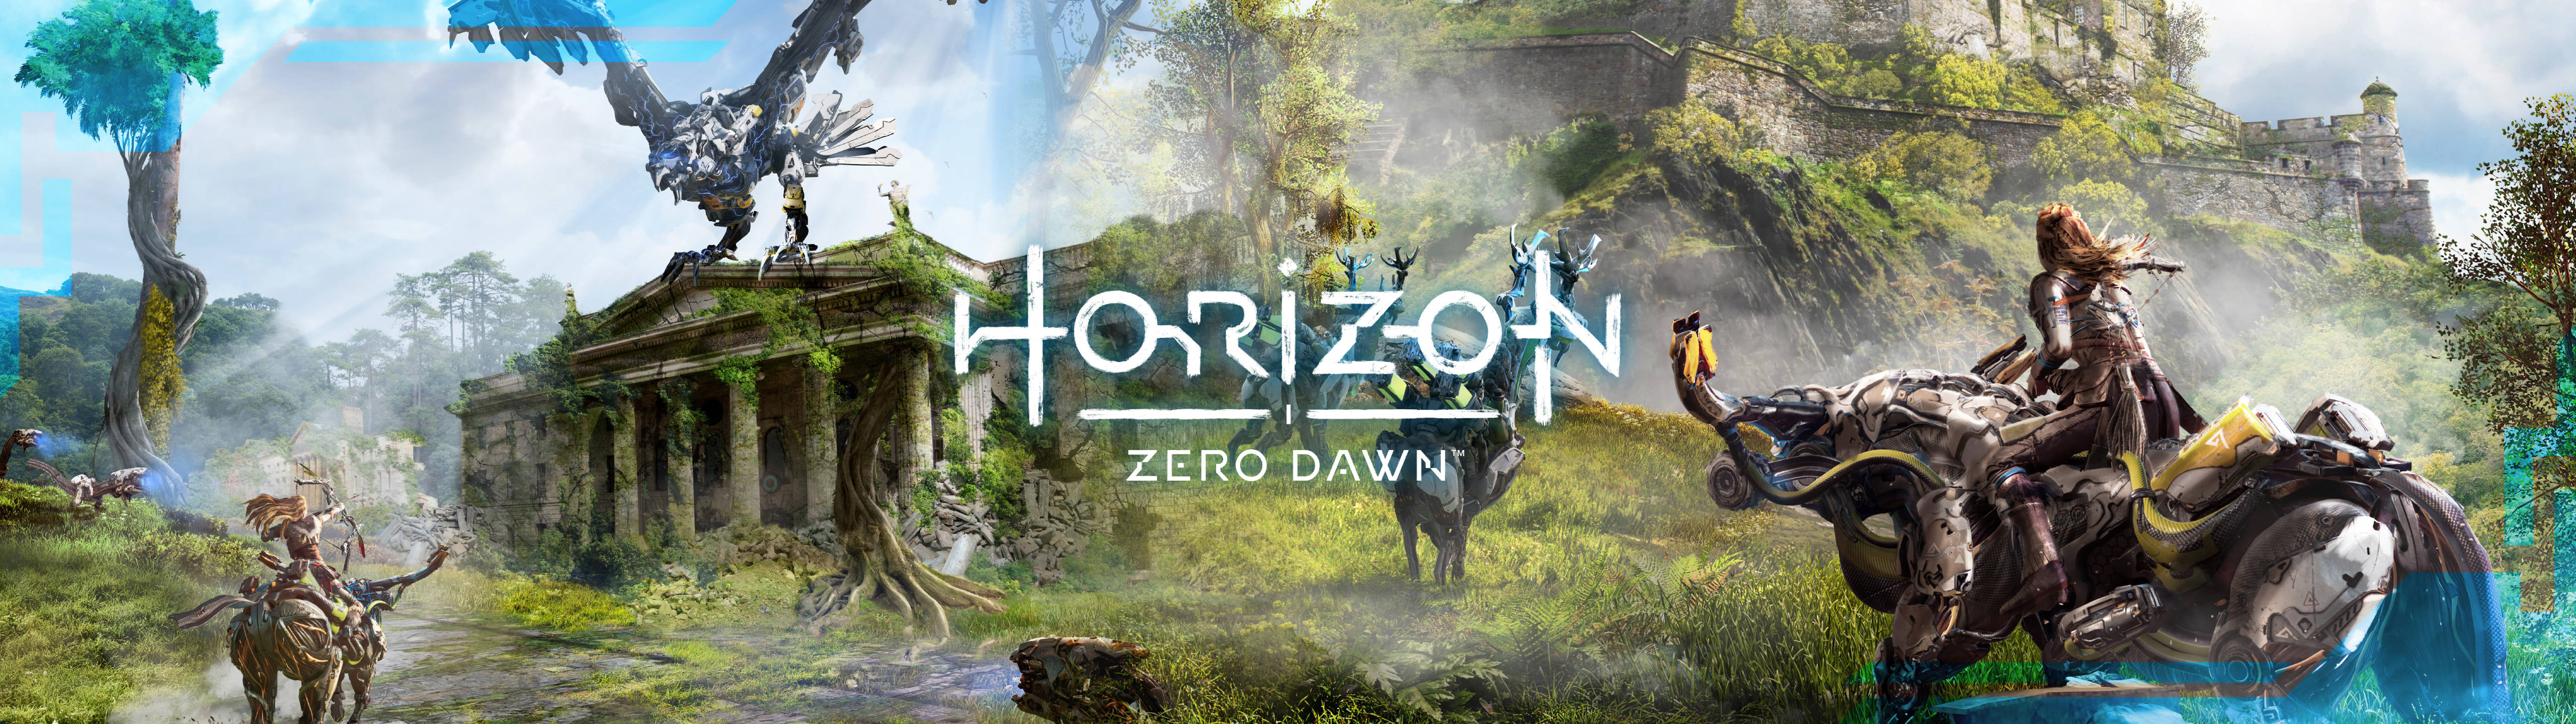 Horizon Zero Dawn Landscape 5120x1440 Gaming Background